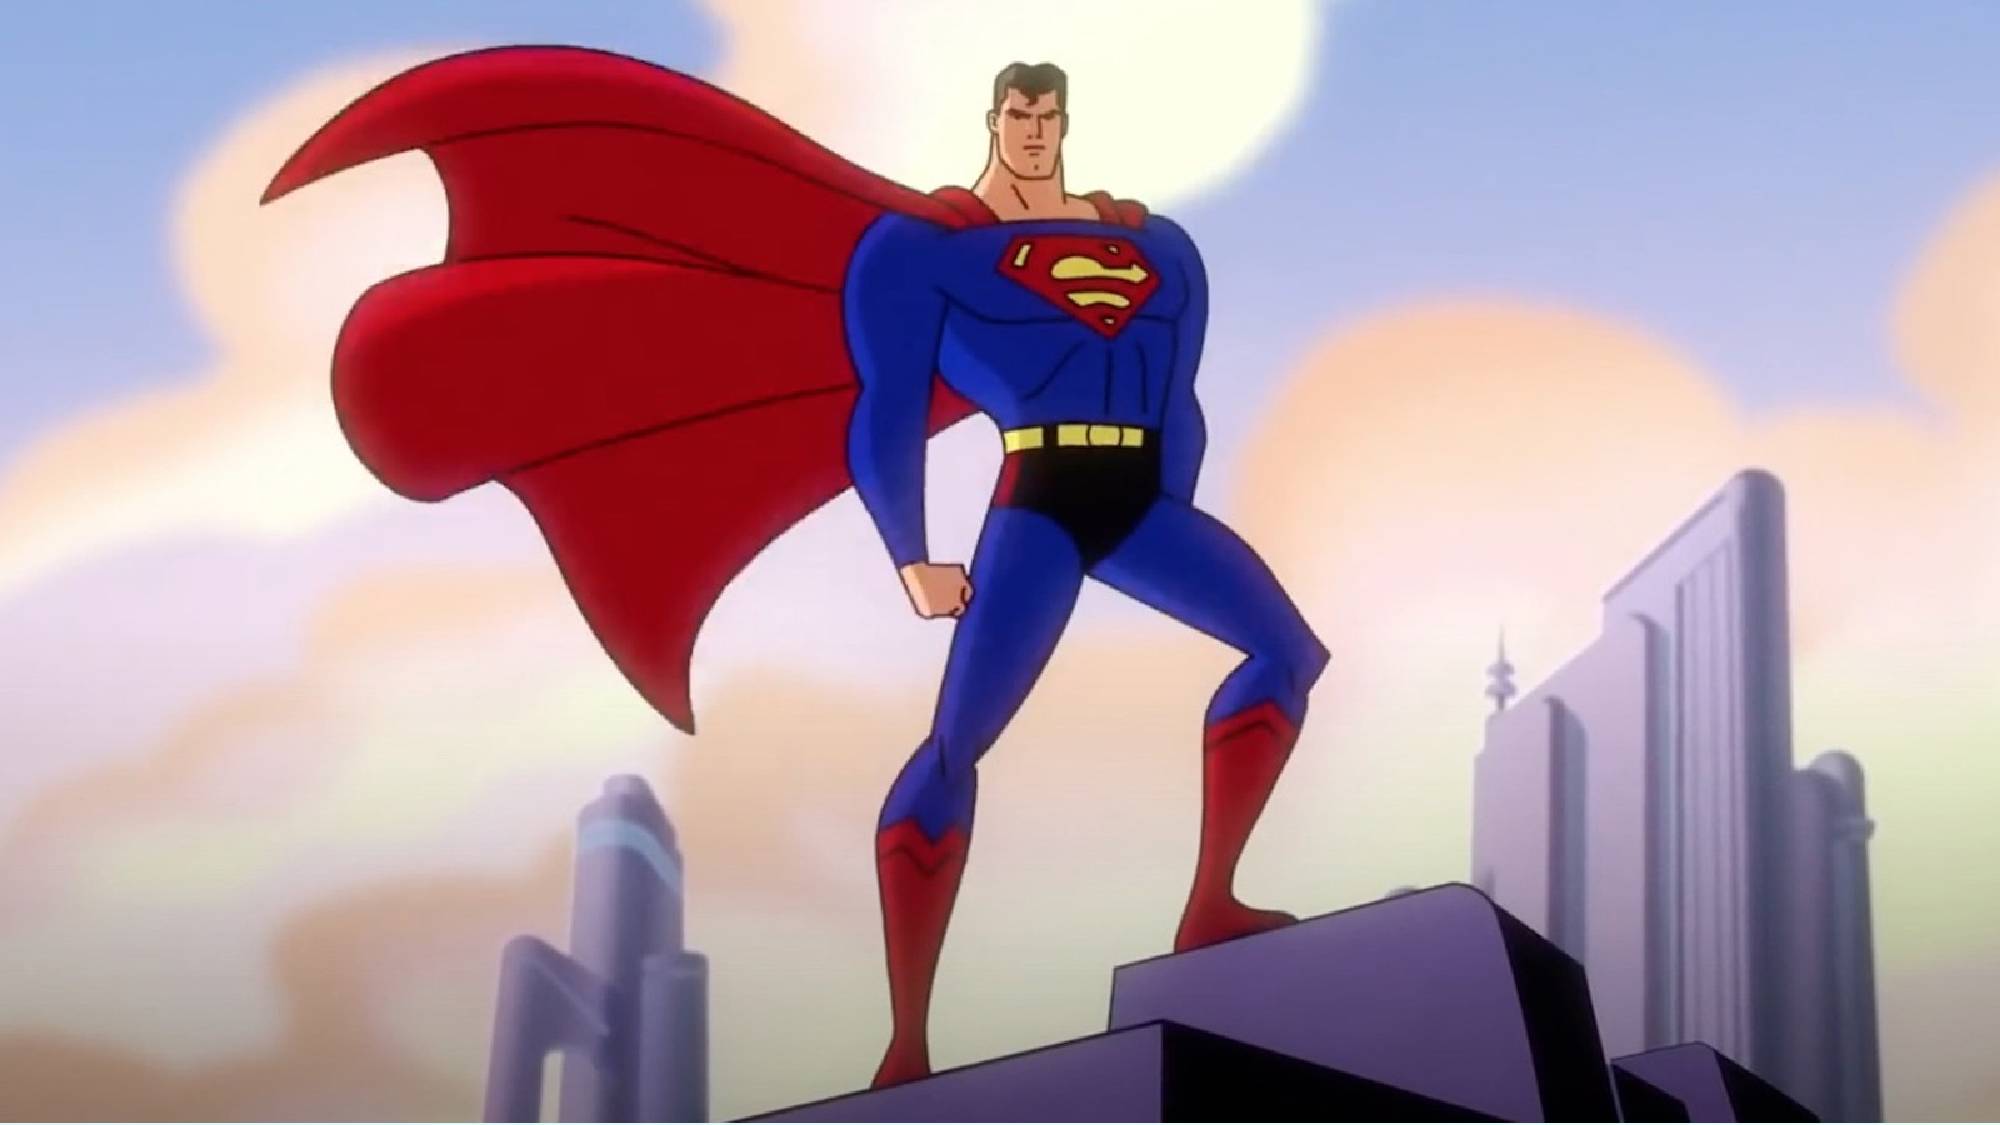 Superman posing in this scene